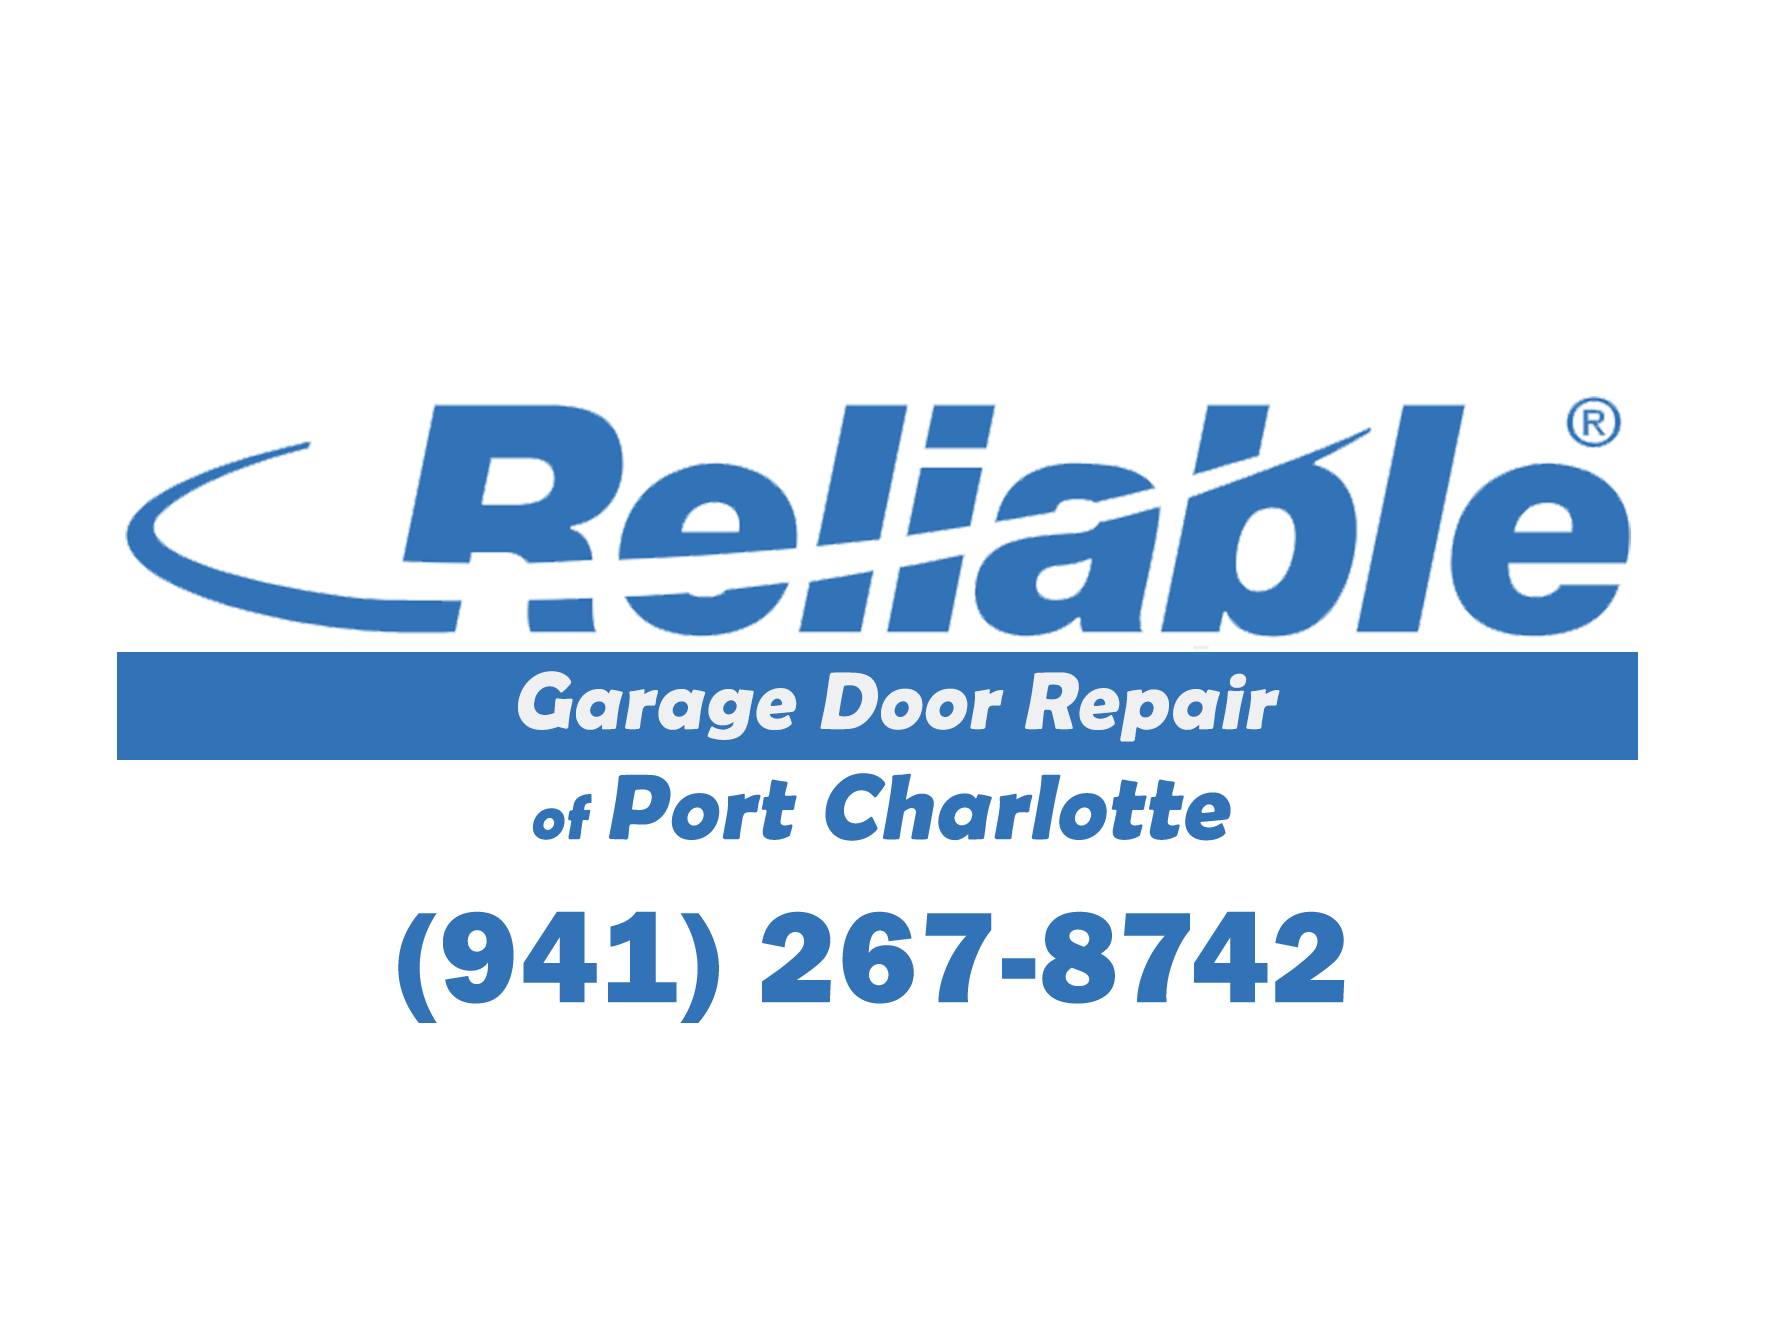 Reliable Garage Door Repair Cape Coral